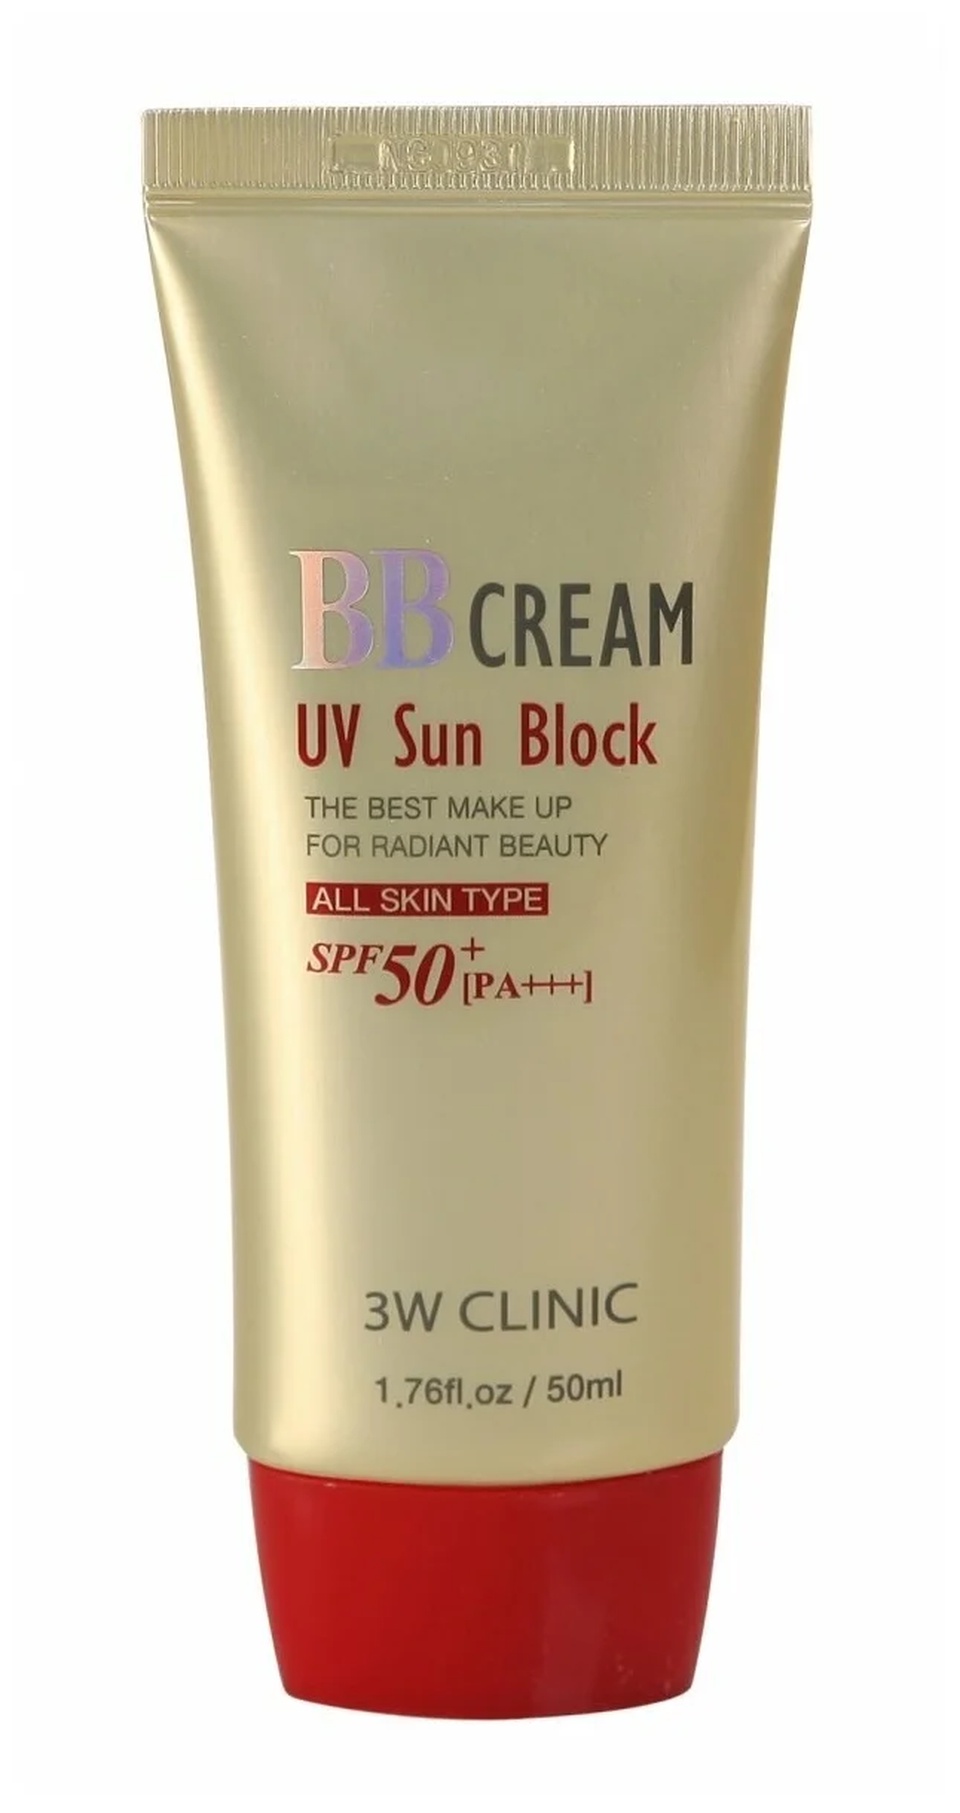 3W Clinic Крем BB для лица солнцезащитный - BB cream uv sun block, 50мл - 478 ₽, заказать онлайн.